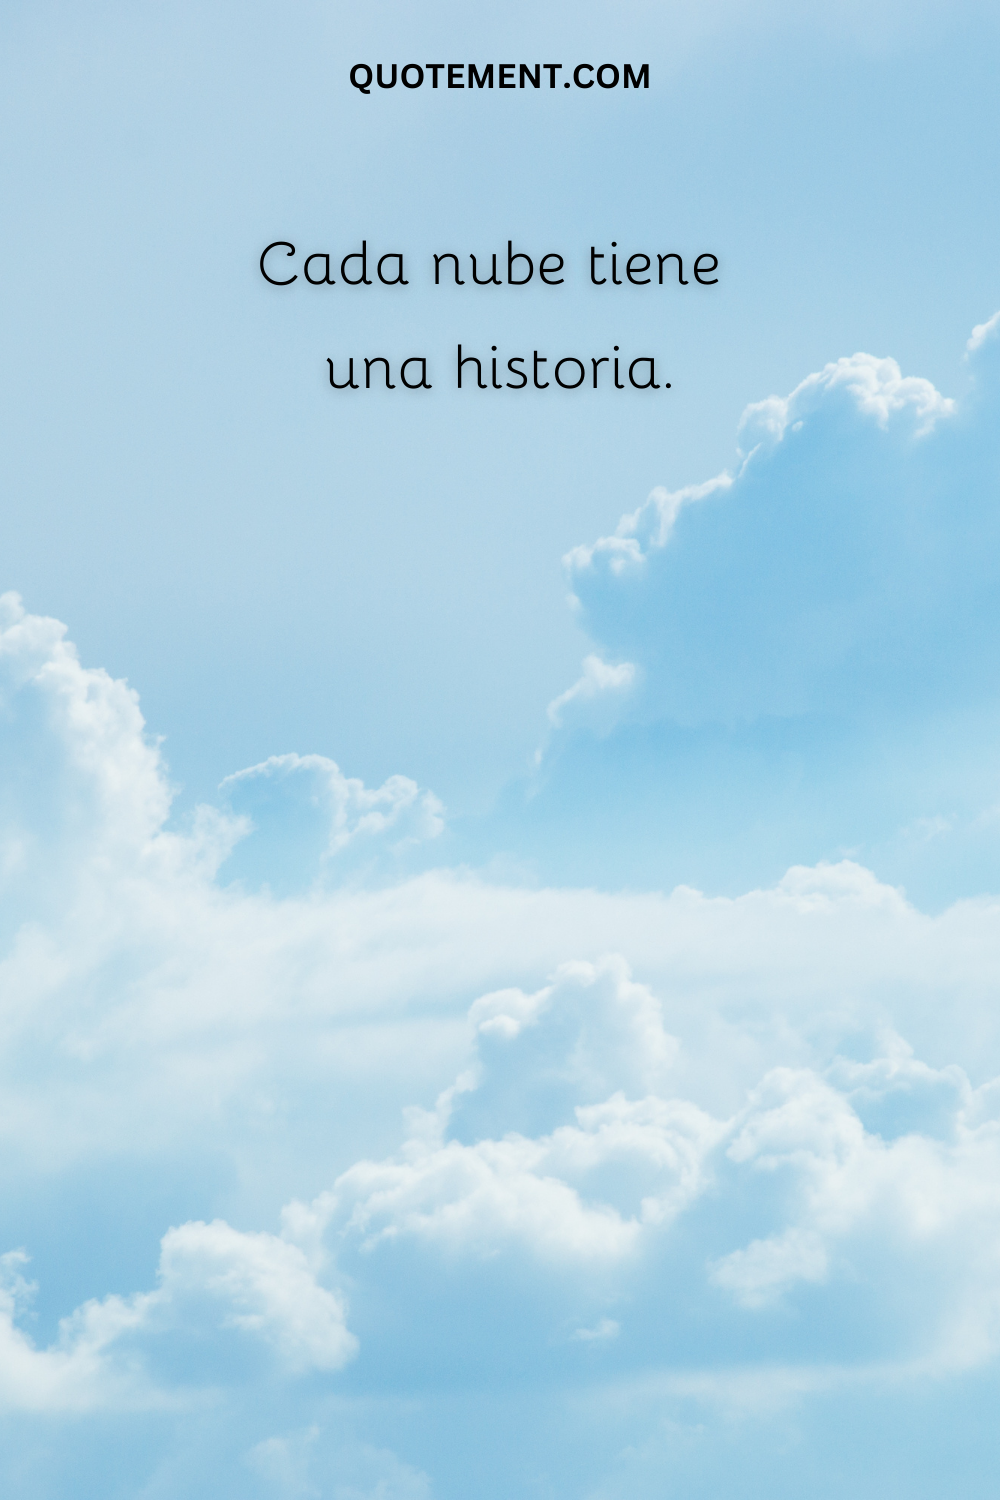 Cada nube tiene una historia.